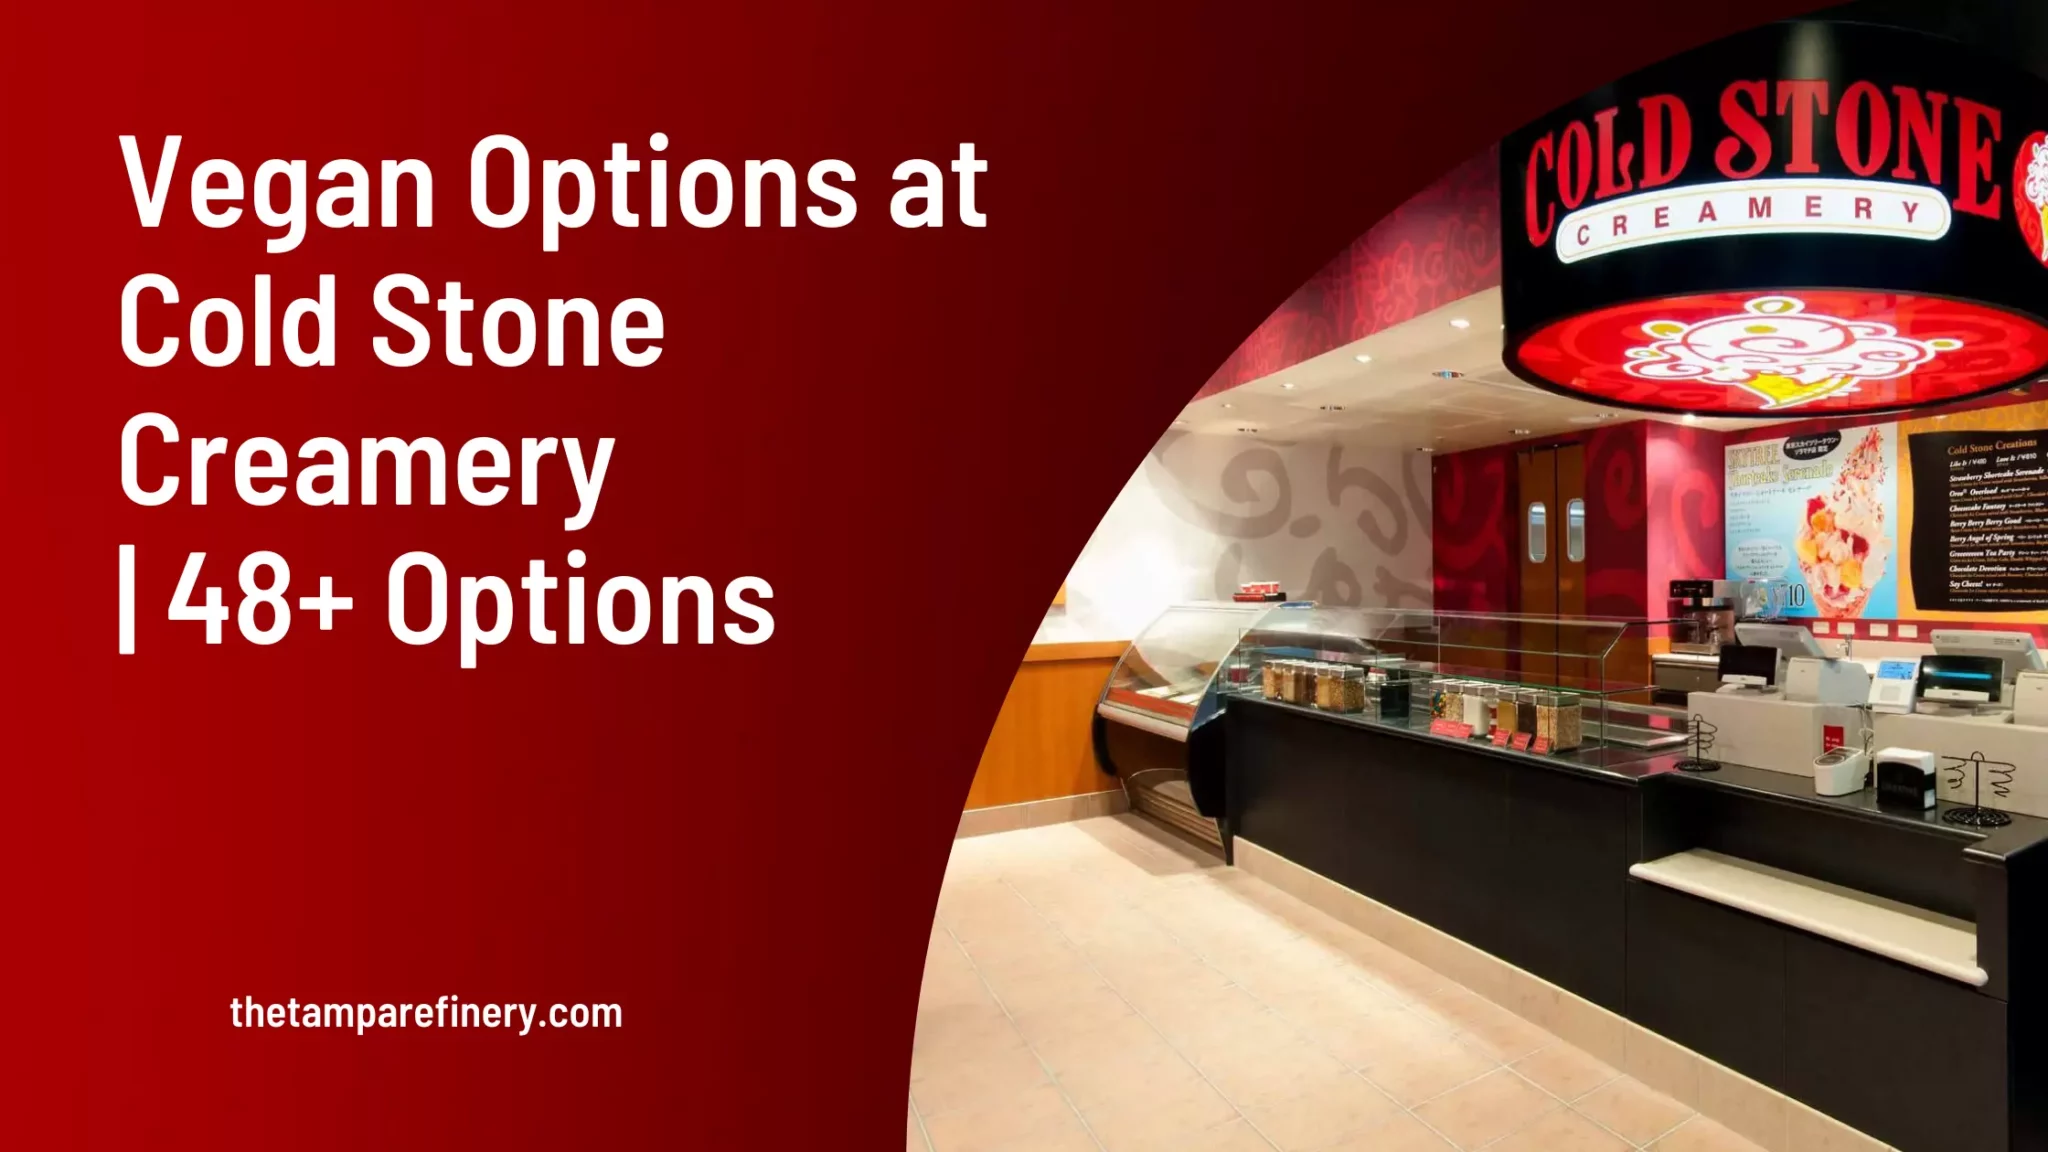 Vegan Options at Cold Stone Creamery